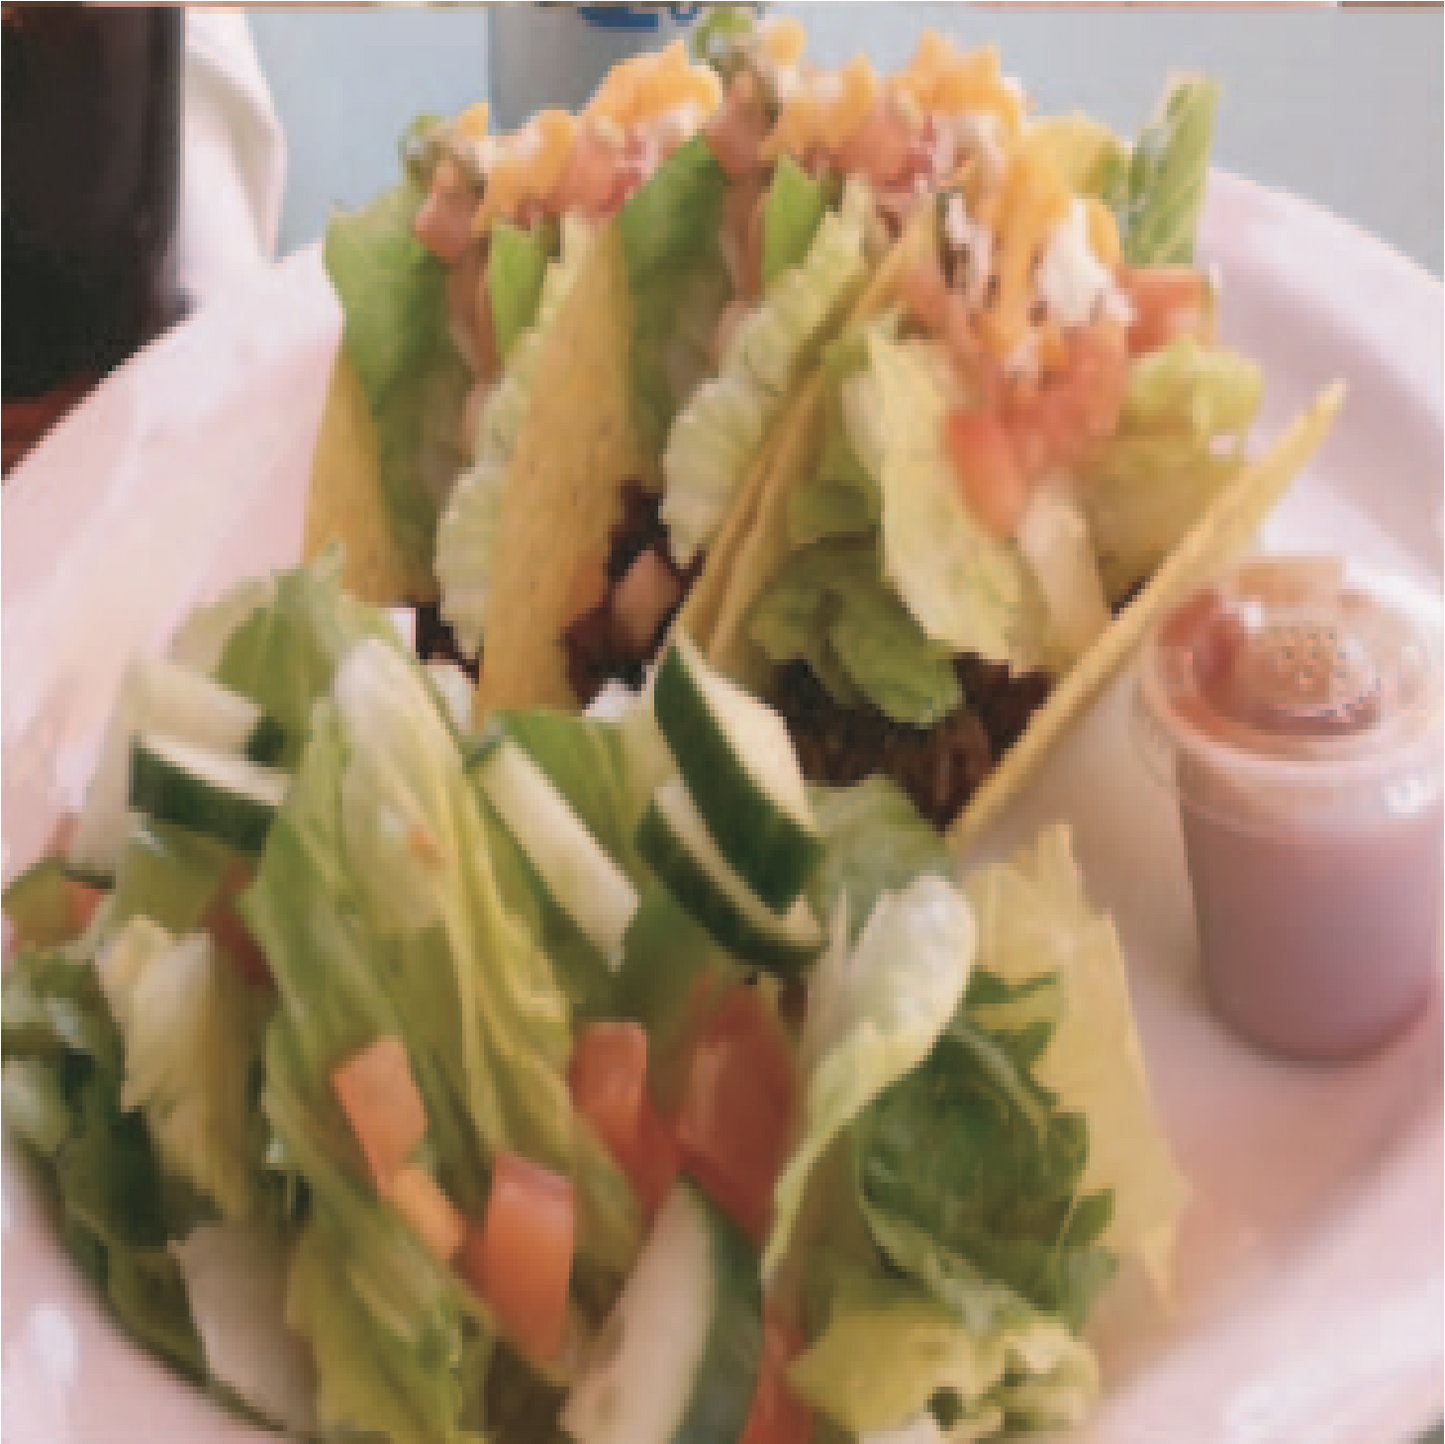 Dinner - Crunchy Tacos